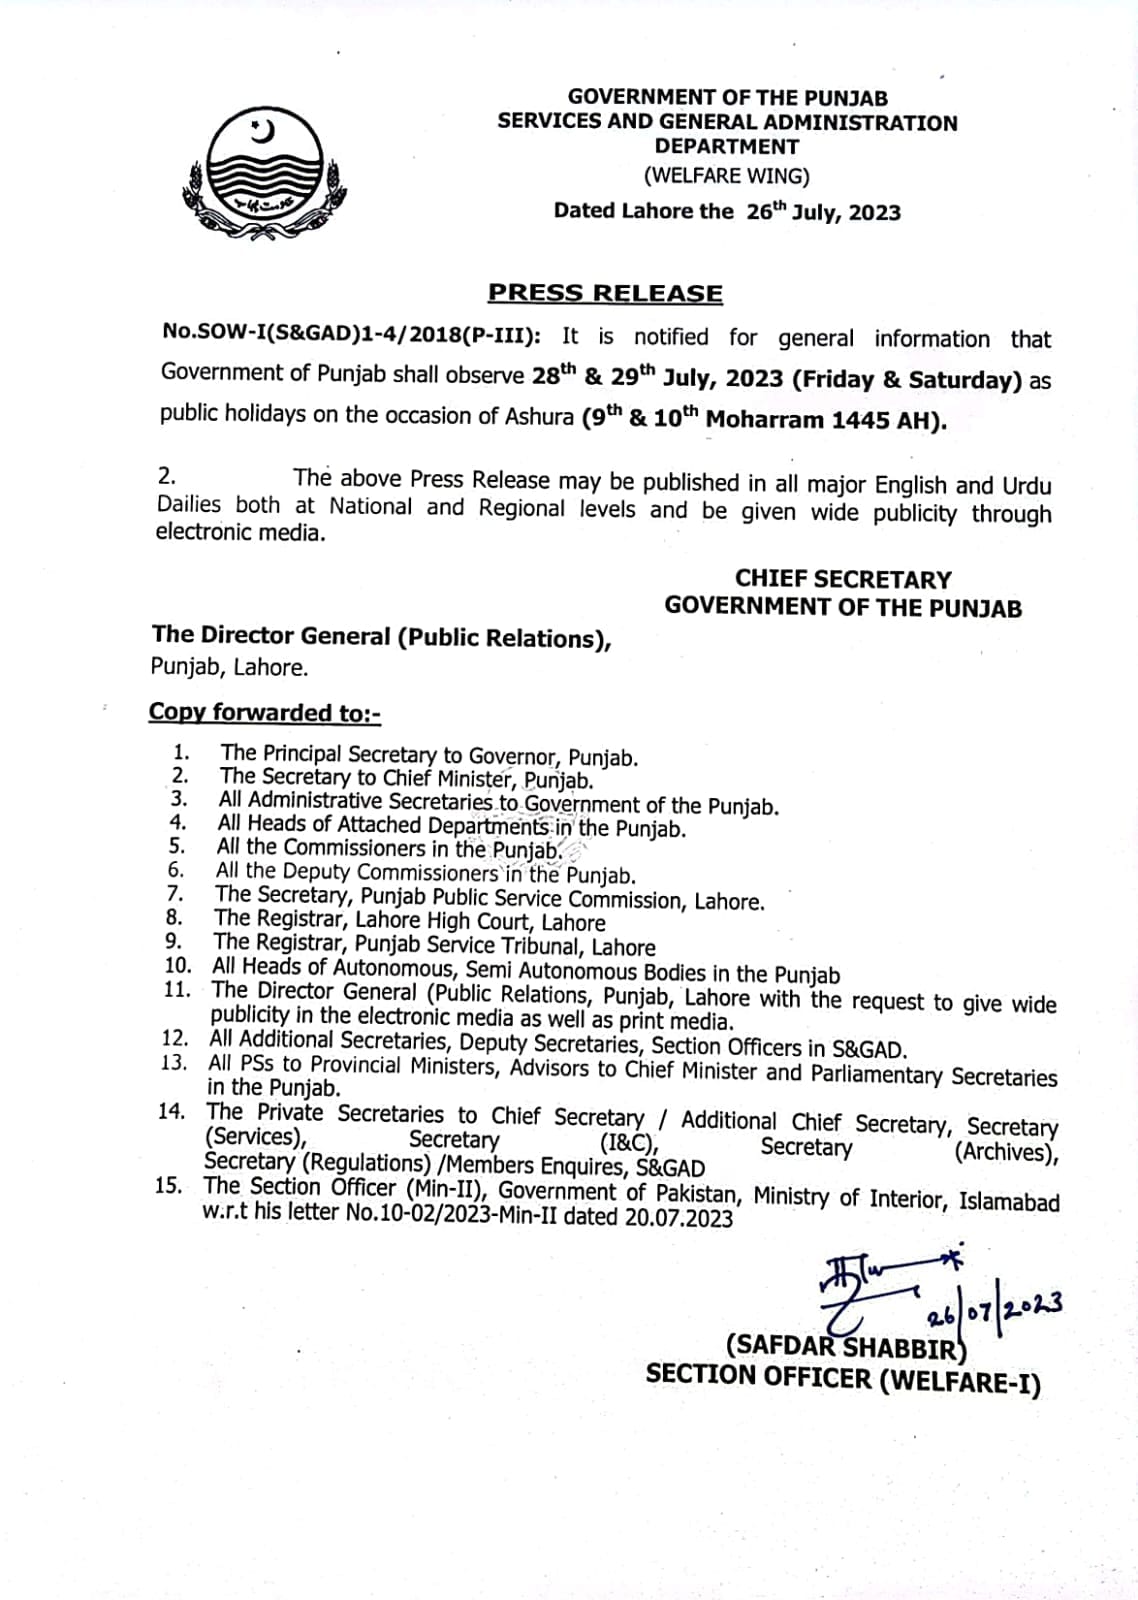 Public Holidays for Ashura Punjab (9th &10th Muharram) 2023